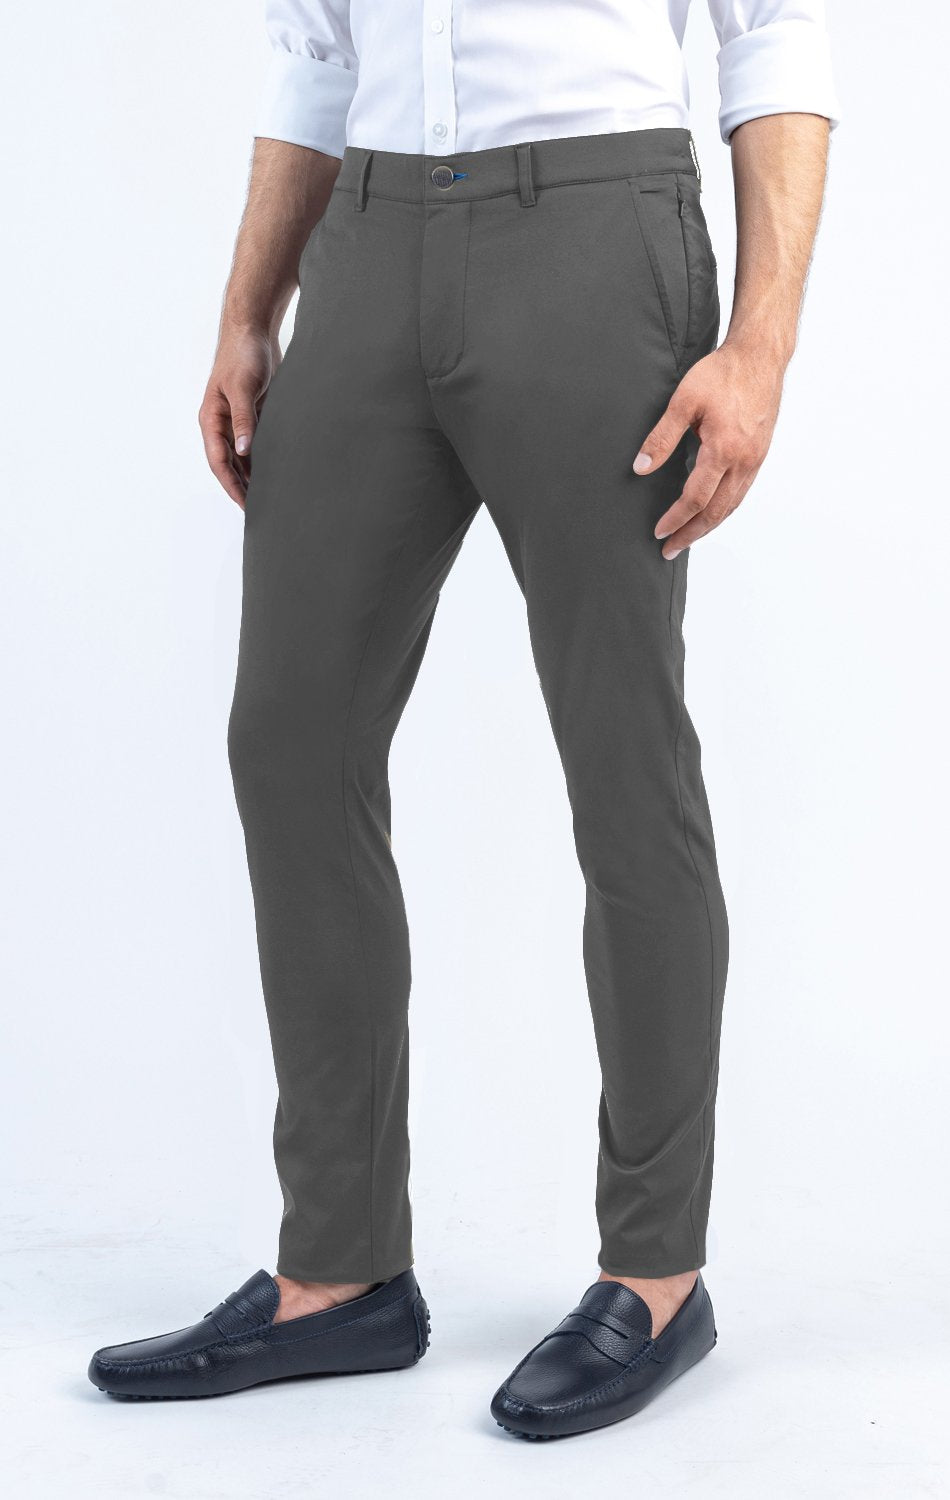 Men Formal Trousers - Buy Men Formal Trousers Online Starting at Just ₹234  | Meesho